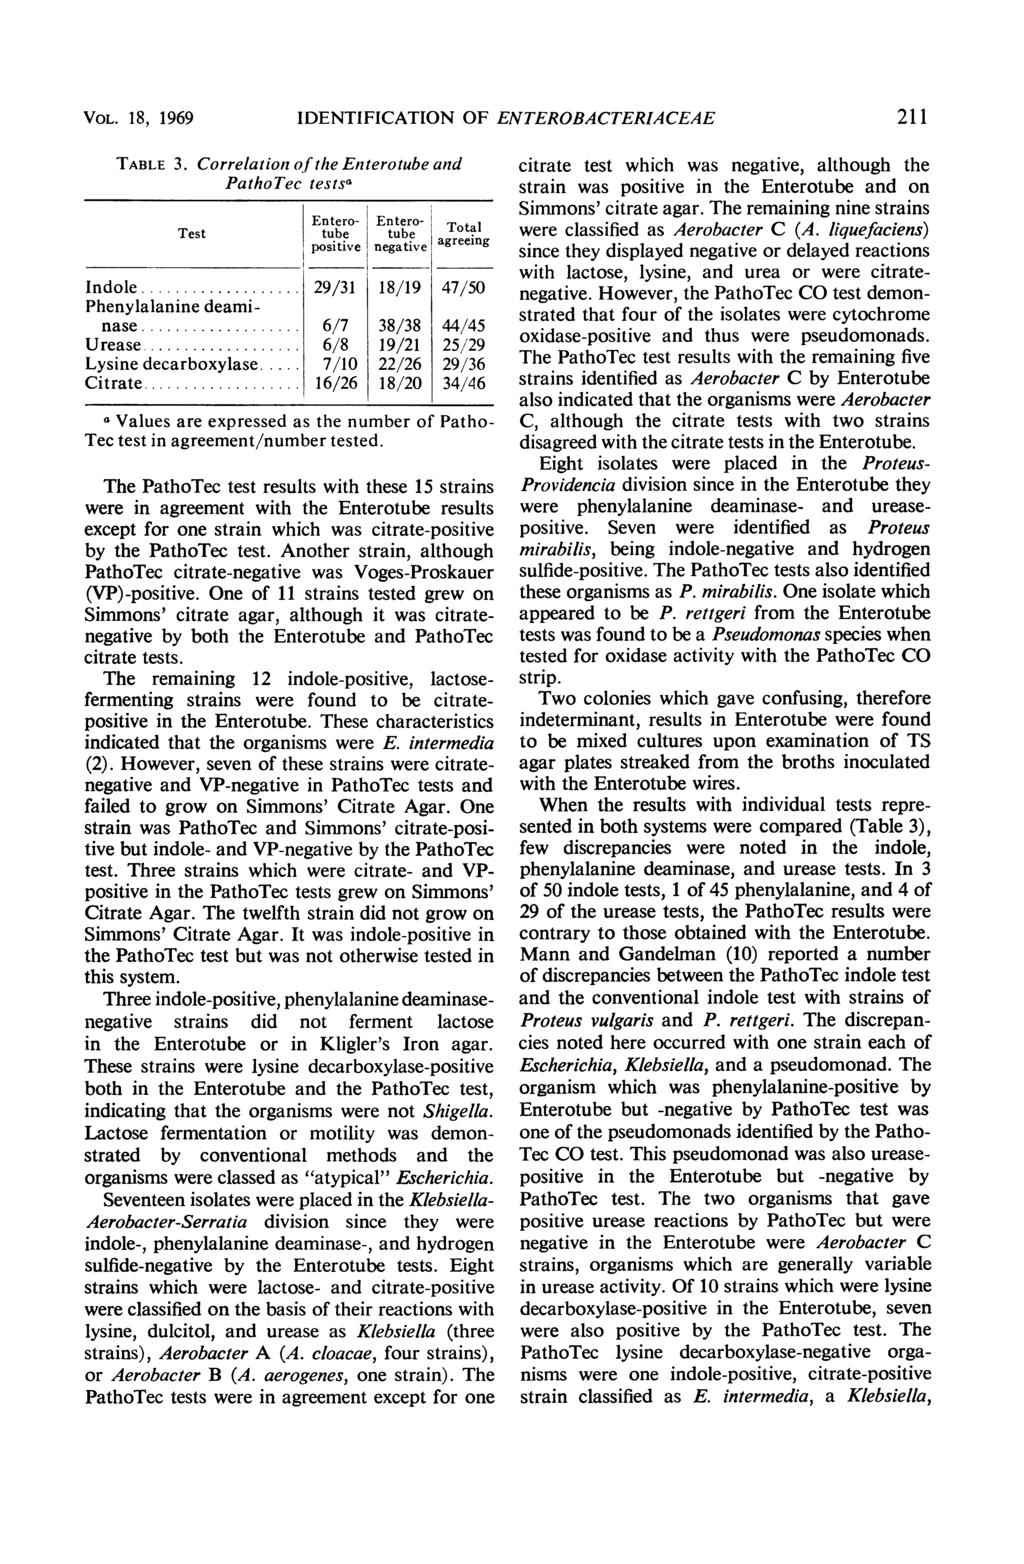 VOL. 18, 1969 IDENTIFICATION OF ENTEROBACTERIACEAE 211 TABLE 3. Correlation of the Enterotube and Patho Tec testsa Entero- Entero- Total Test tube tub e geen positive negative agreeing Indole.